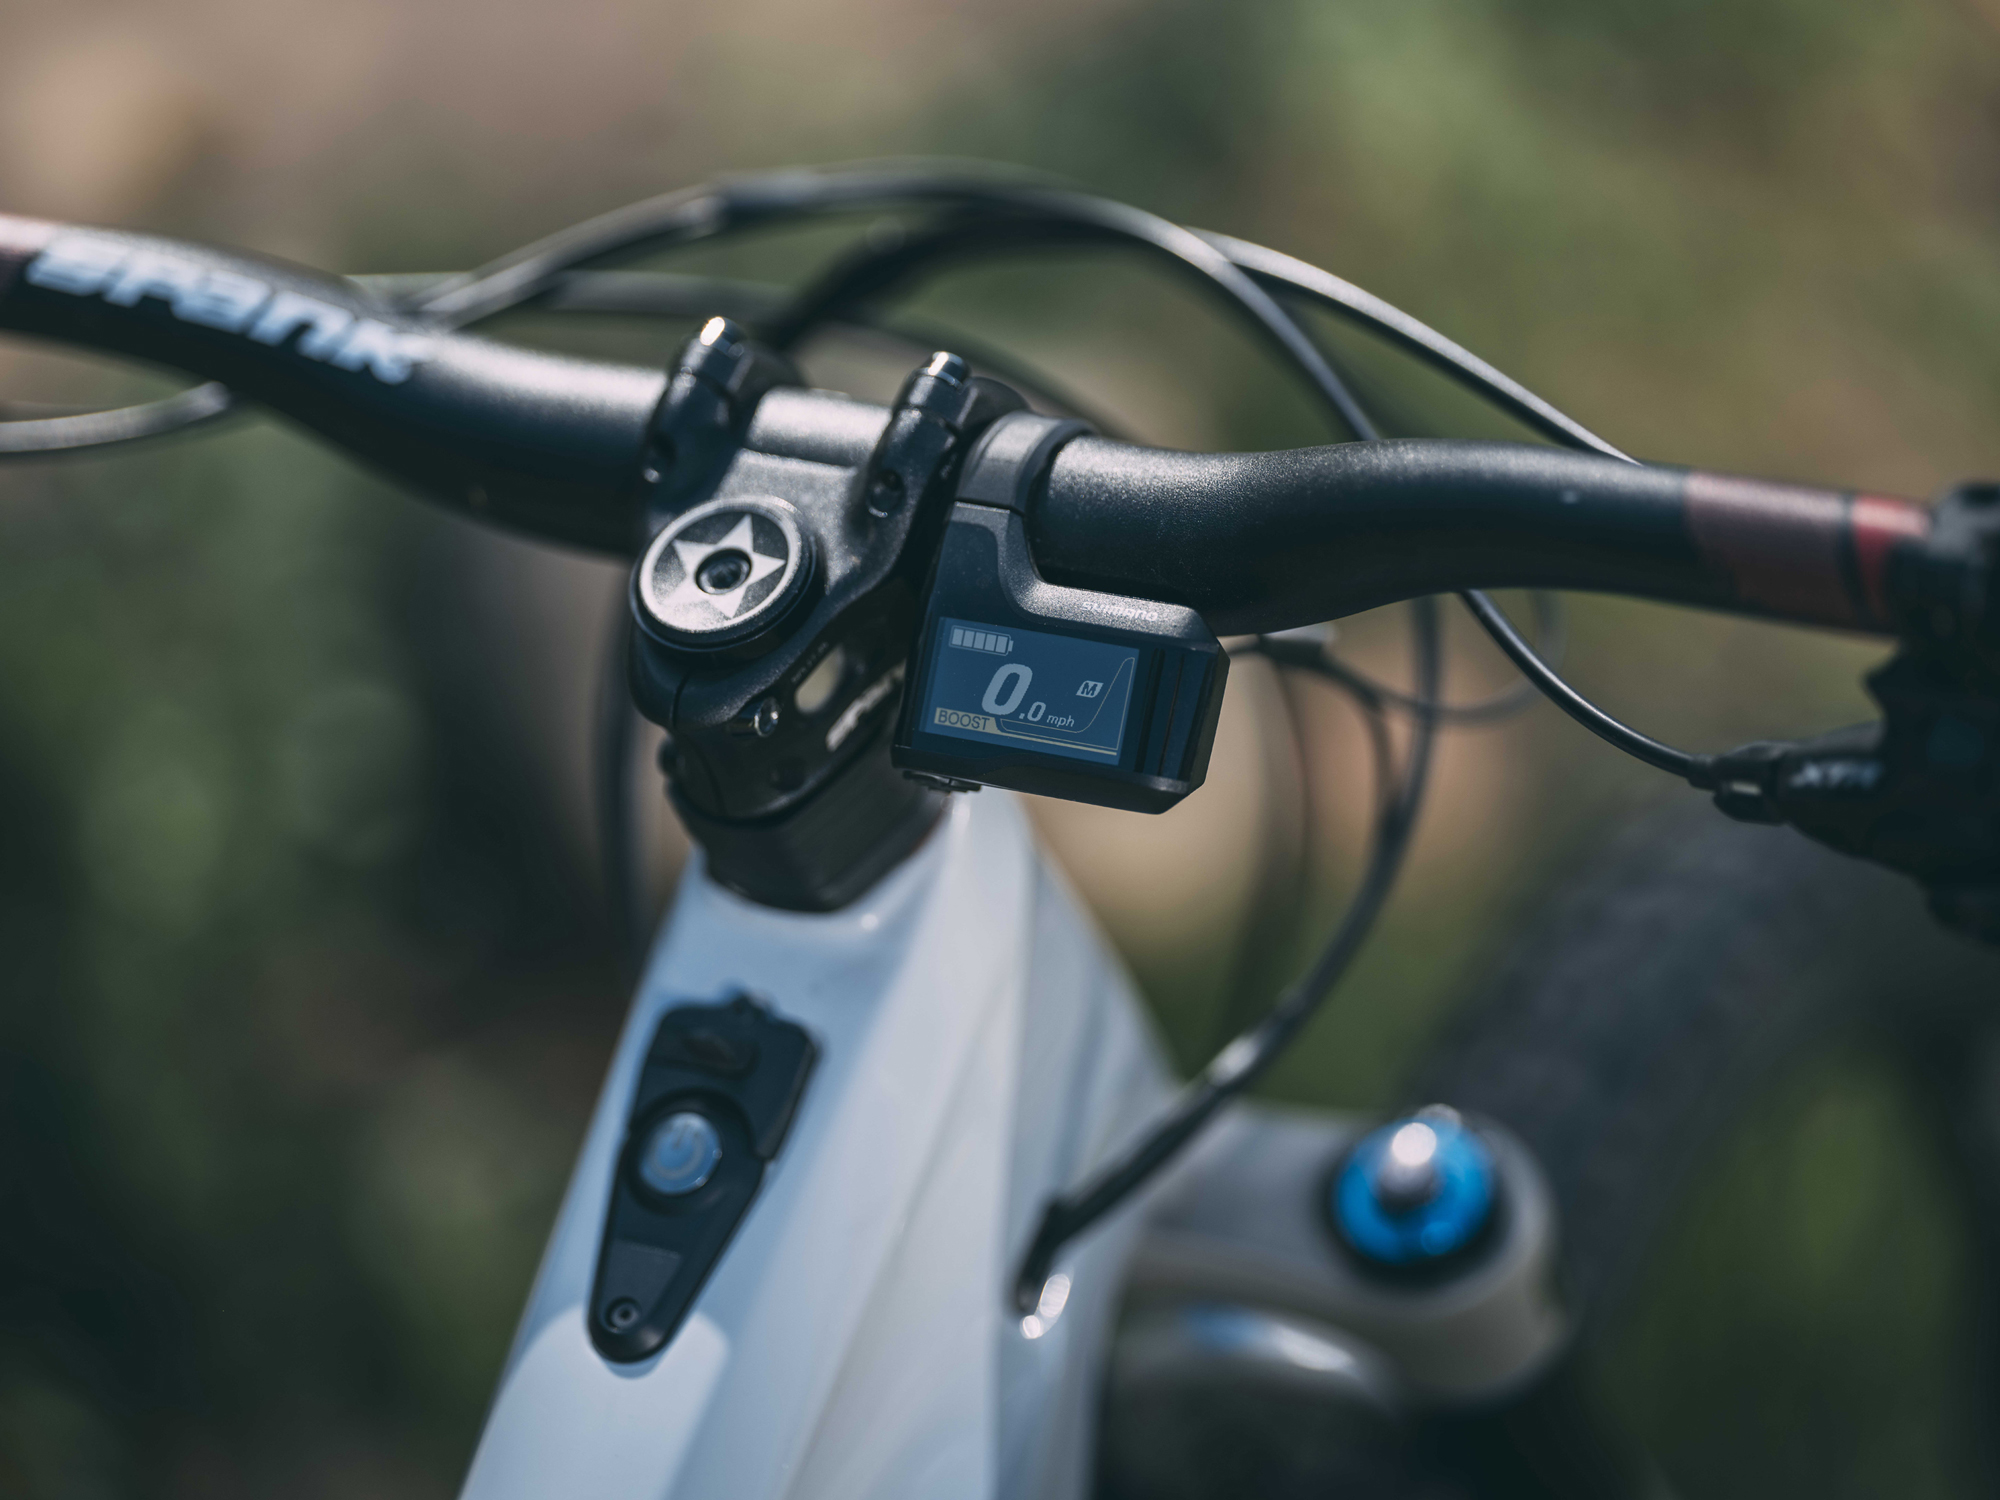 Shimano EP8 mountain bike cockpit set up